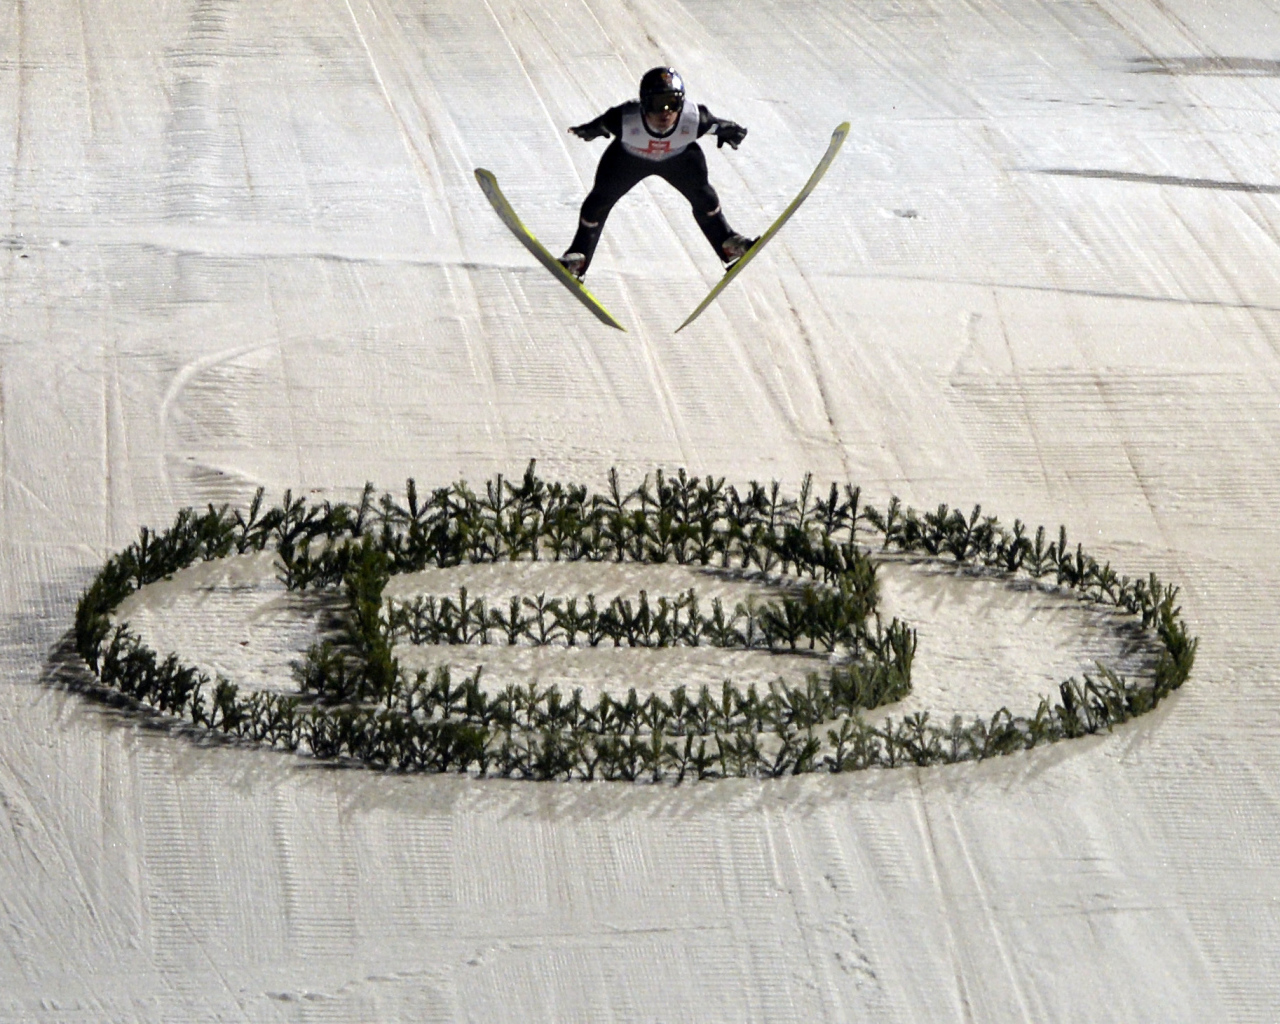 Обладатель серебряной медали австрийский прыгун с трамплина  Томас Дитхарт на олимпиаде в Сочи